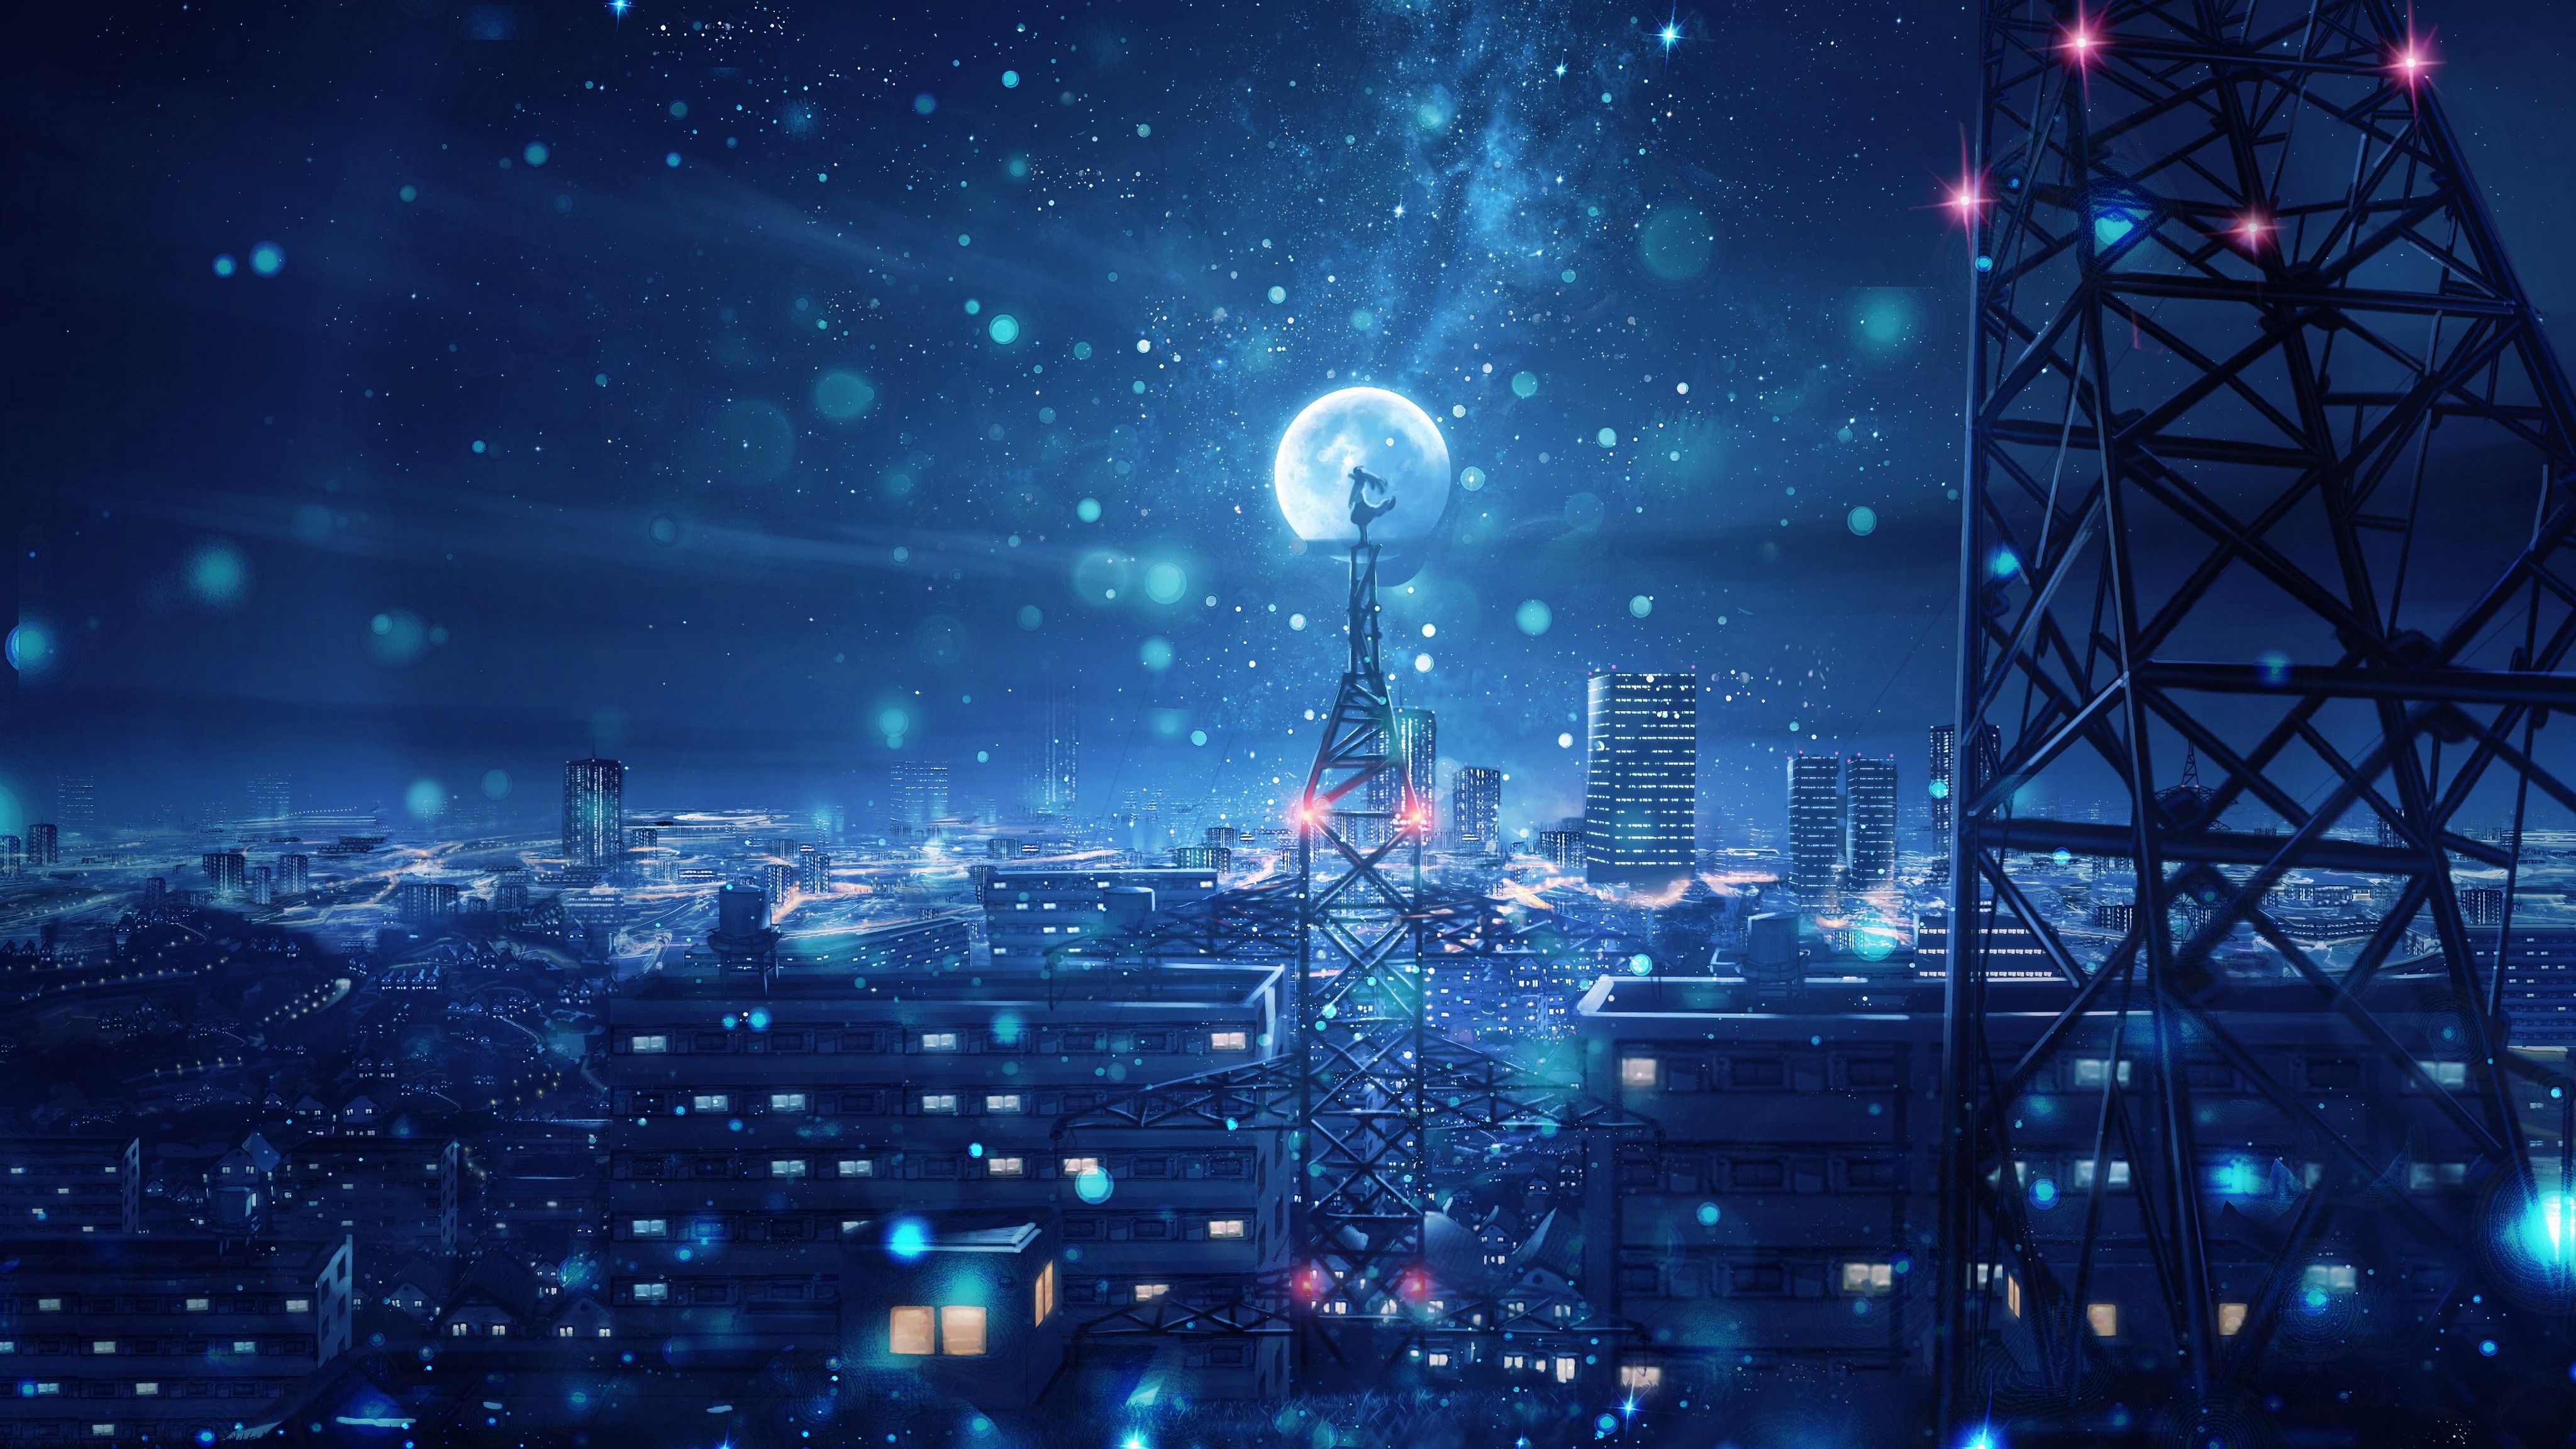 4K Wallpaper Dream, Blue, Cityscape, Snowfall, Moon, Cold night